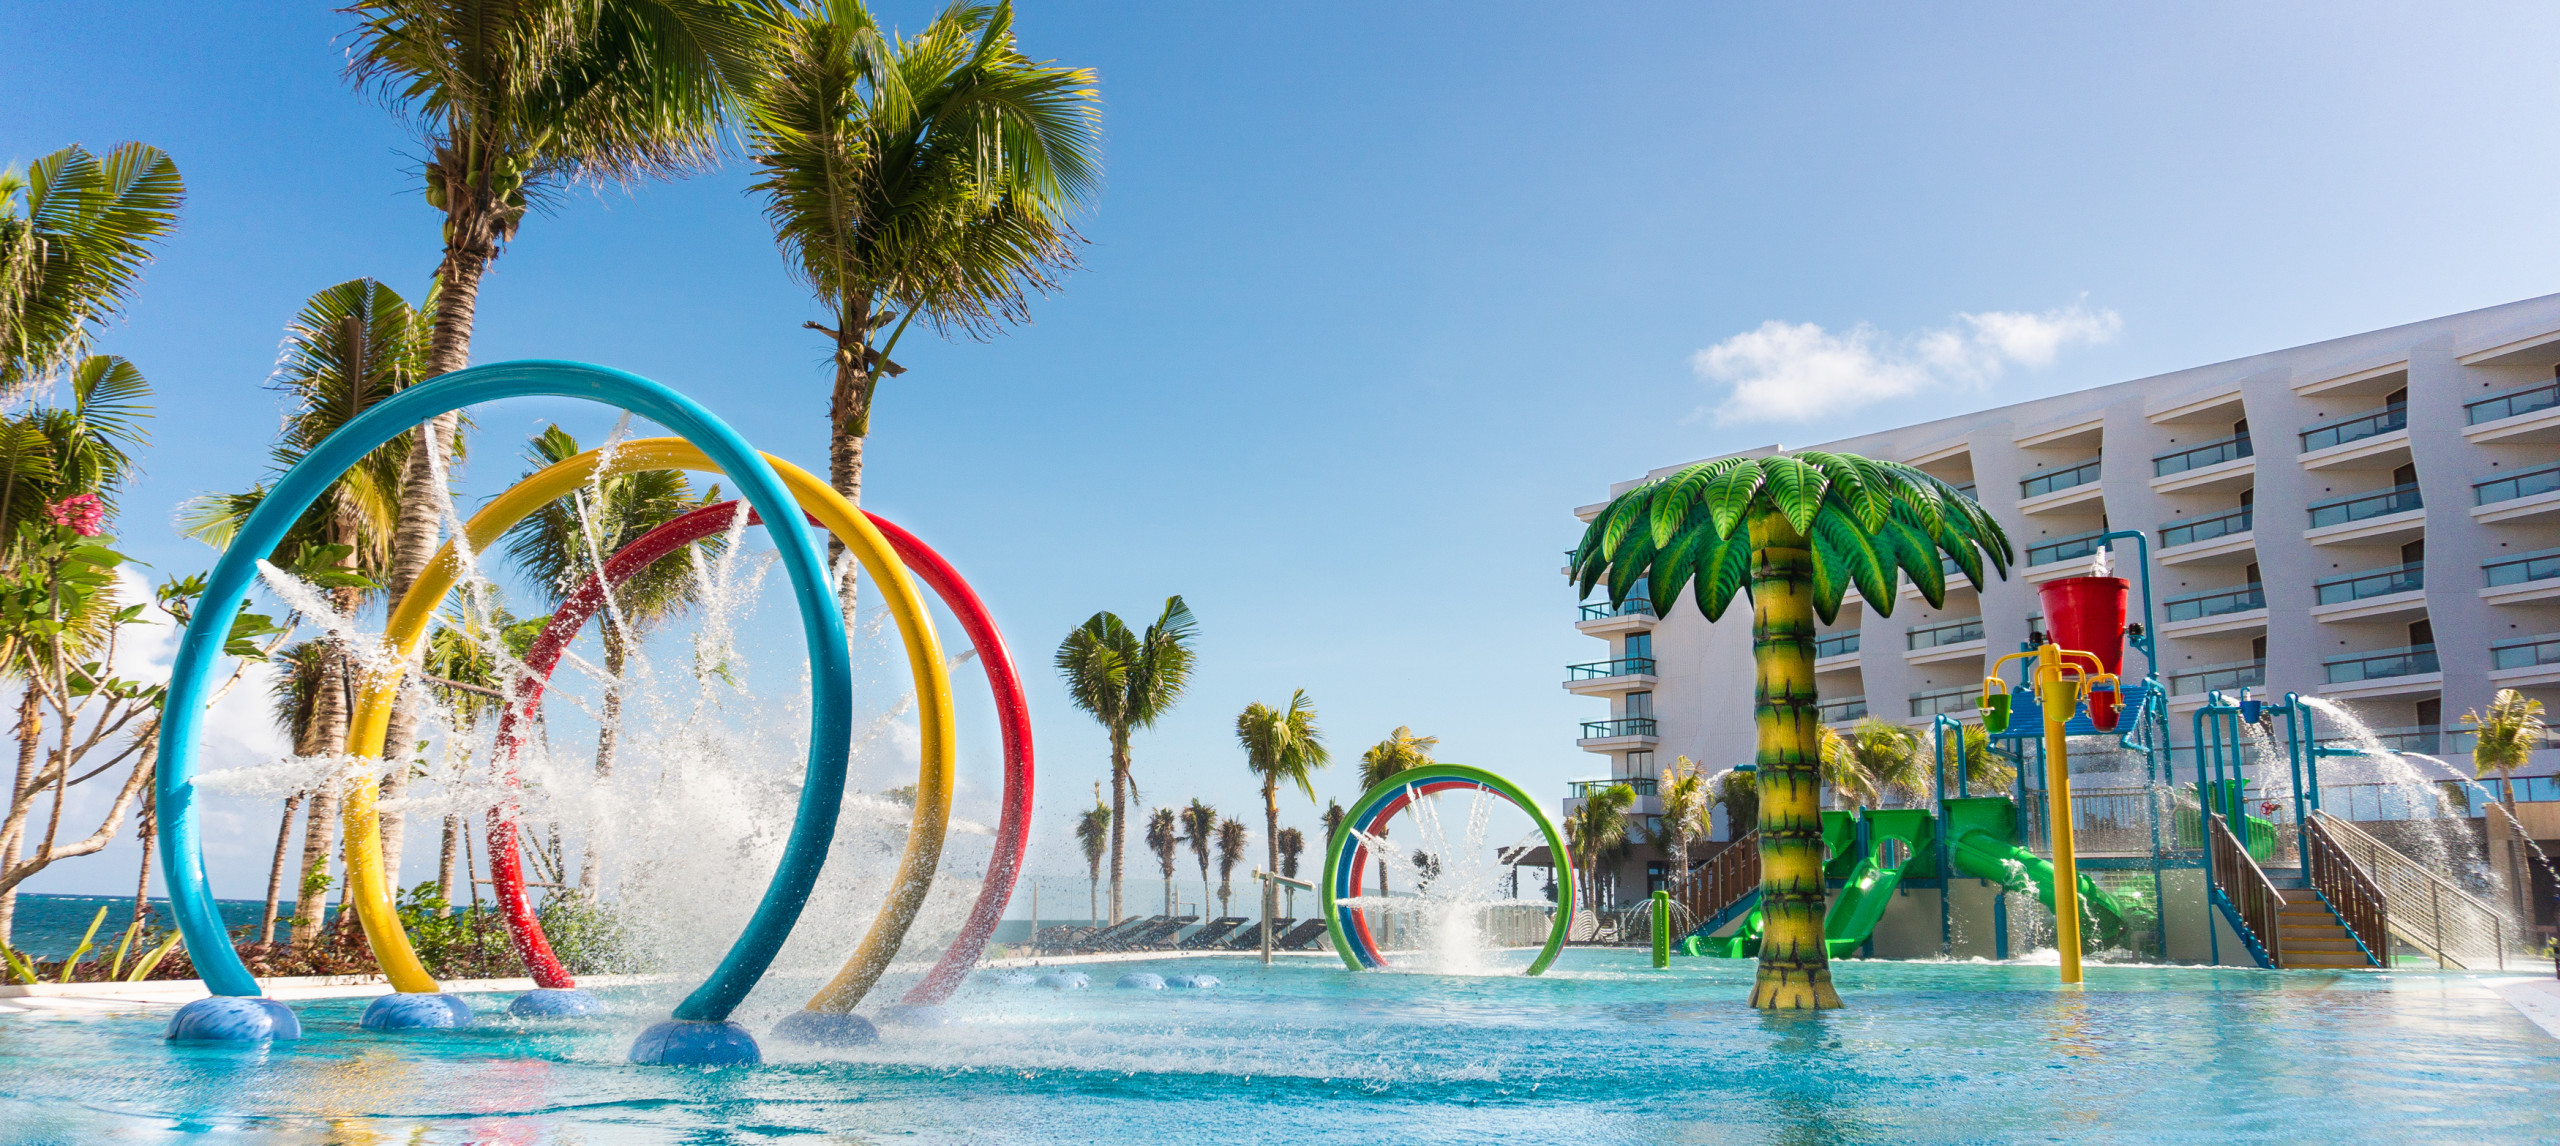 Hilton Cancun splash playground